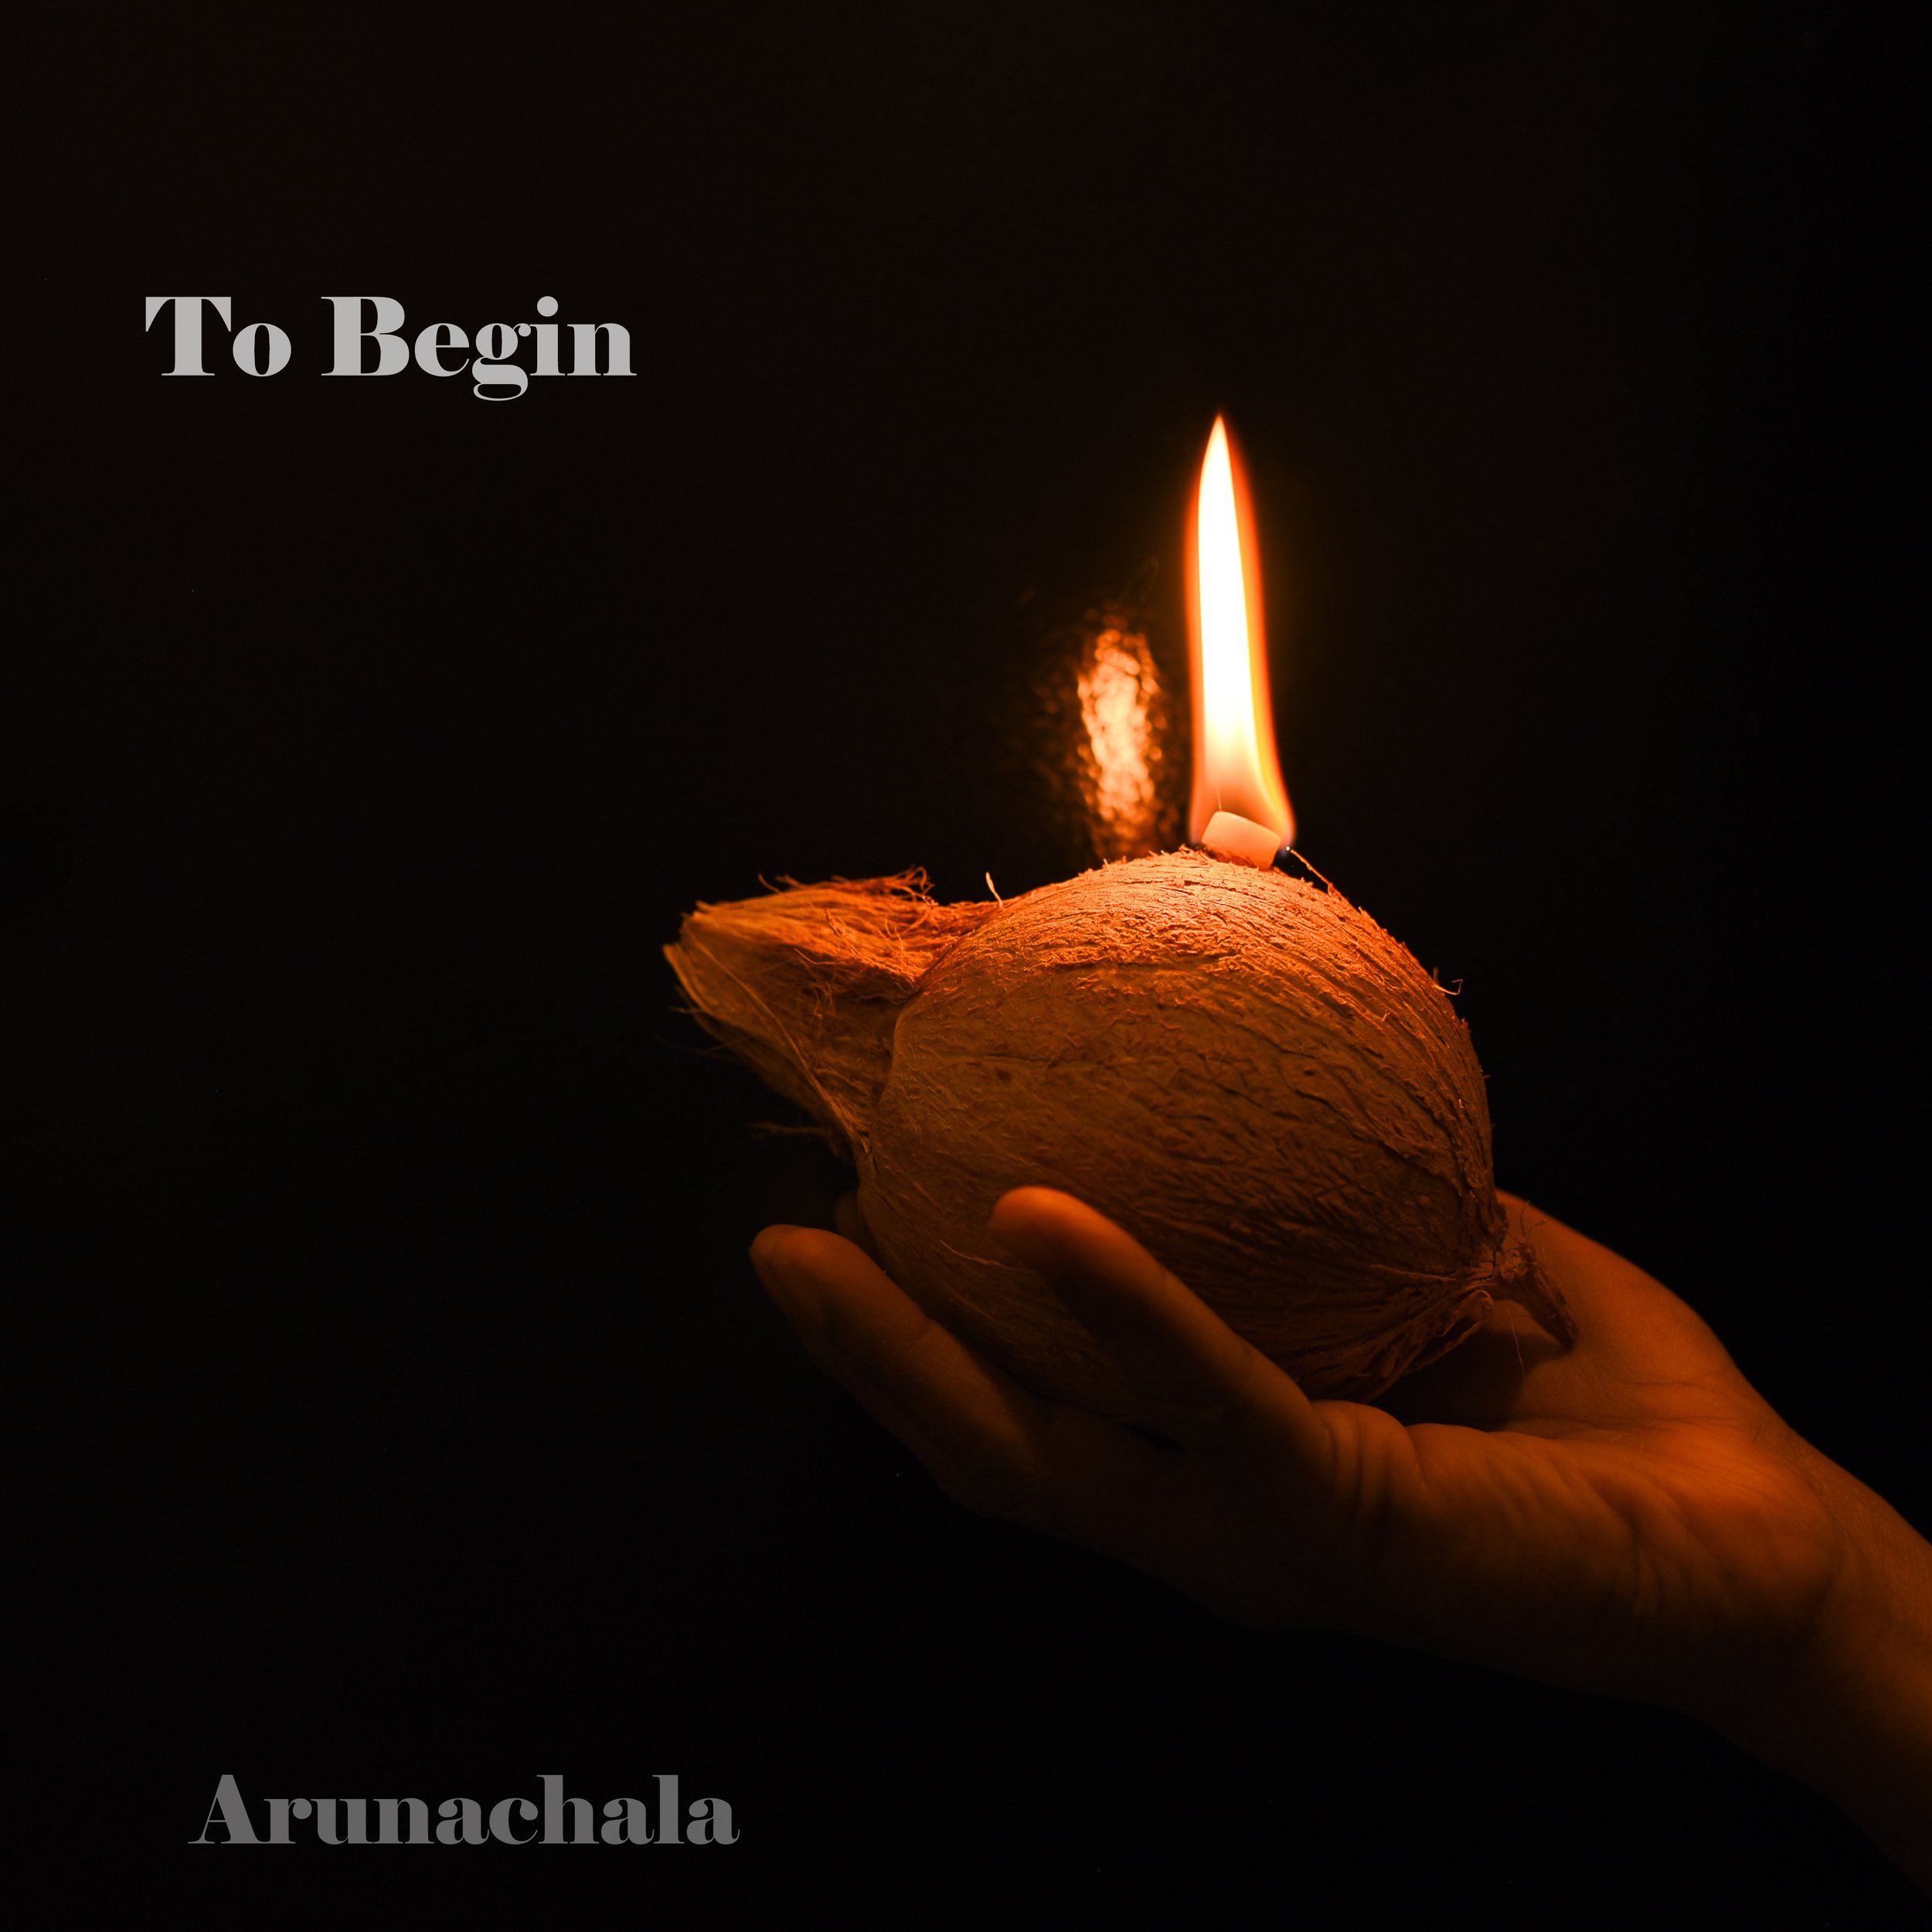 To Begin Album cover_Arunachala web 300 2.jpg